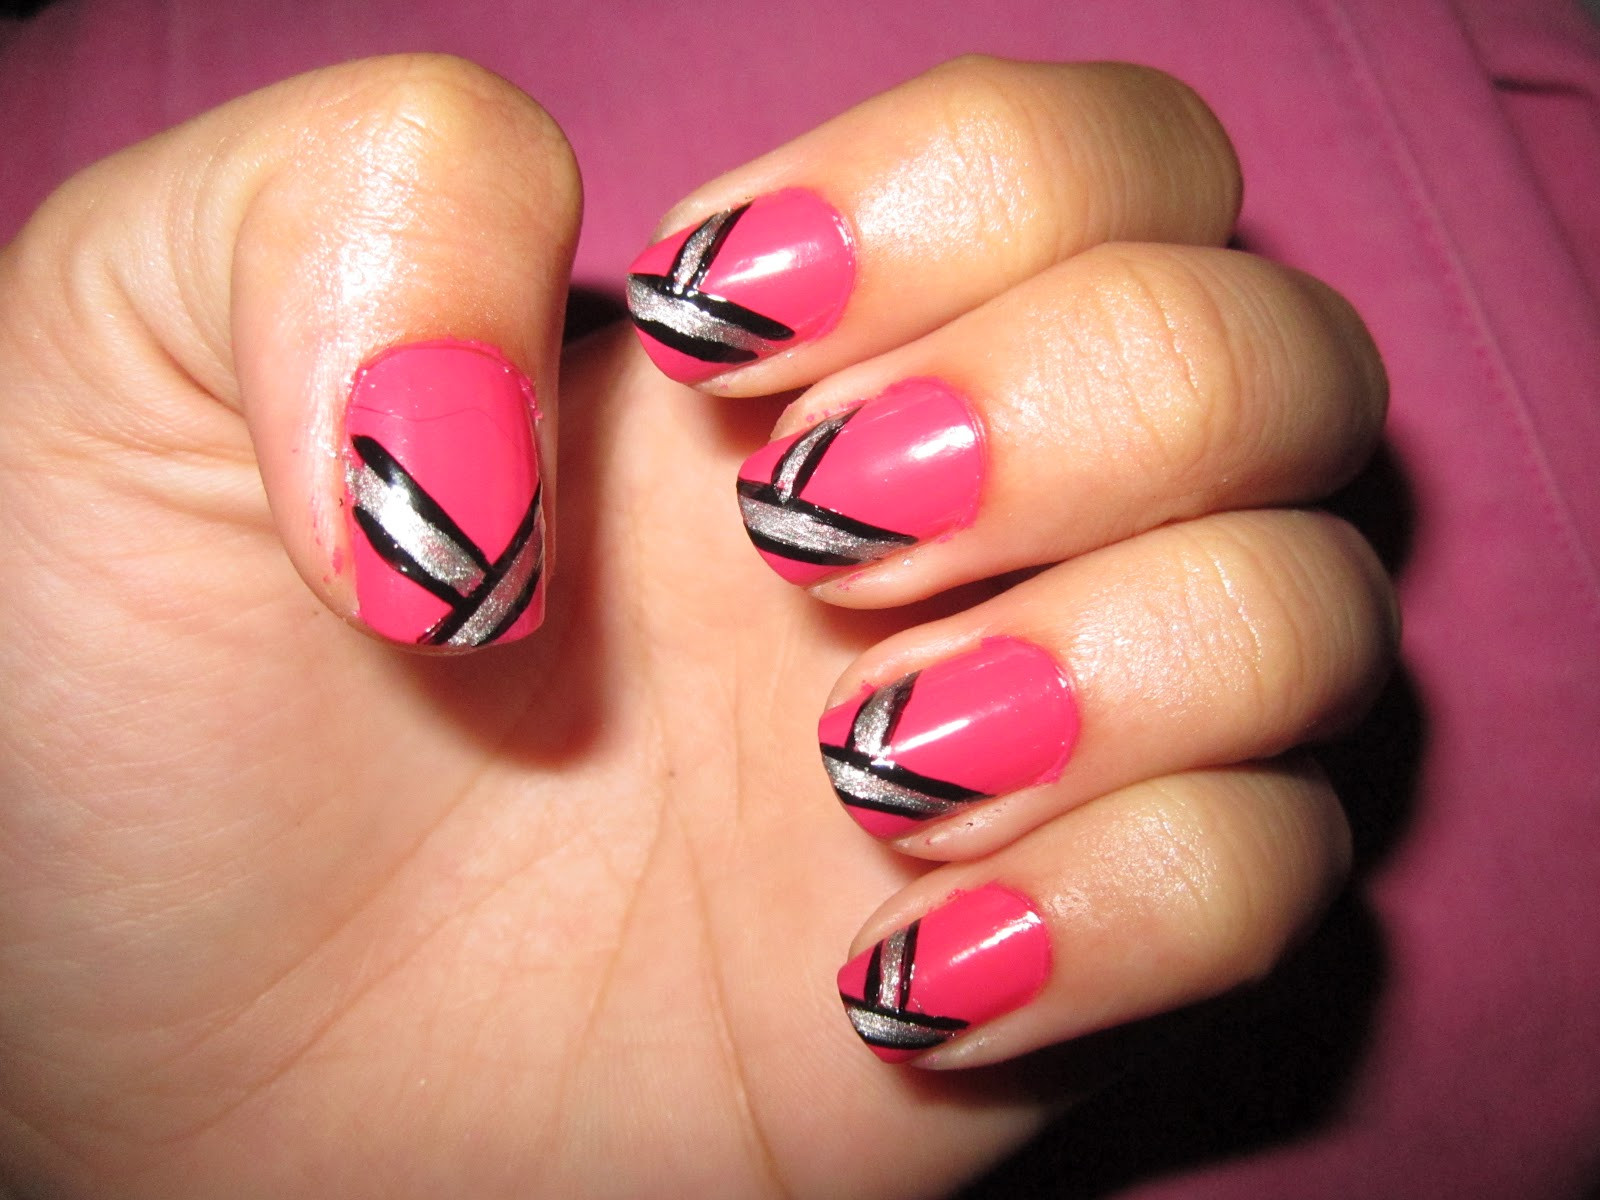 Pics Of Nail Designs
 Steph G My recent nail art